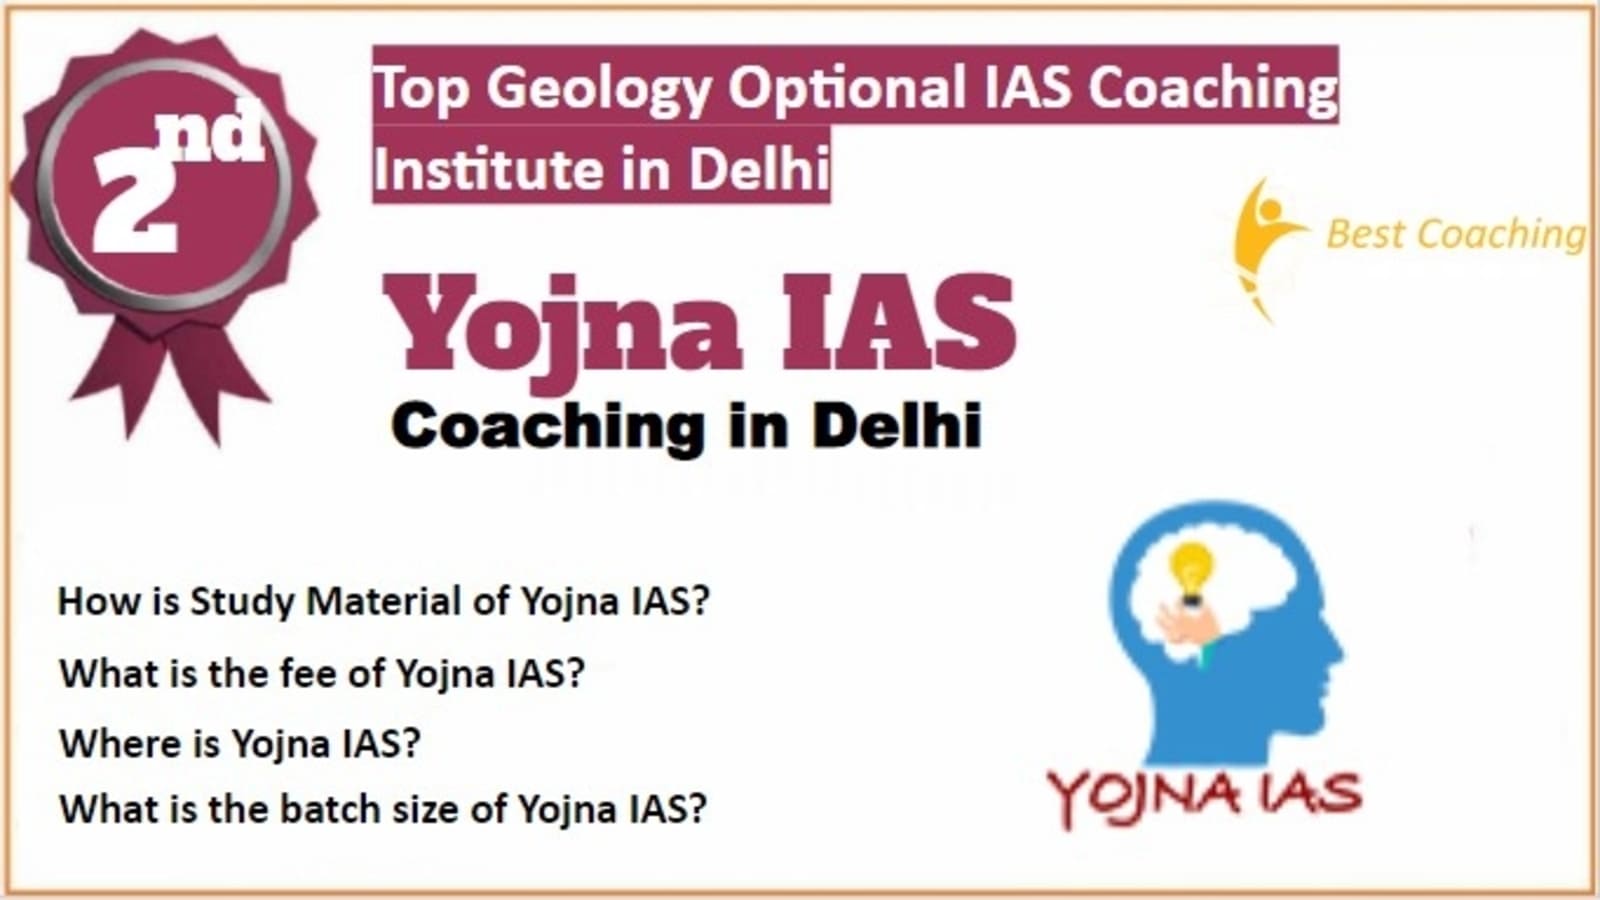 Rank 2 Best Geology Optional IAS Coaching in Delhi